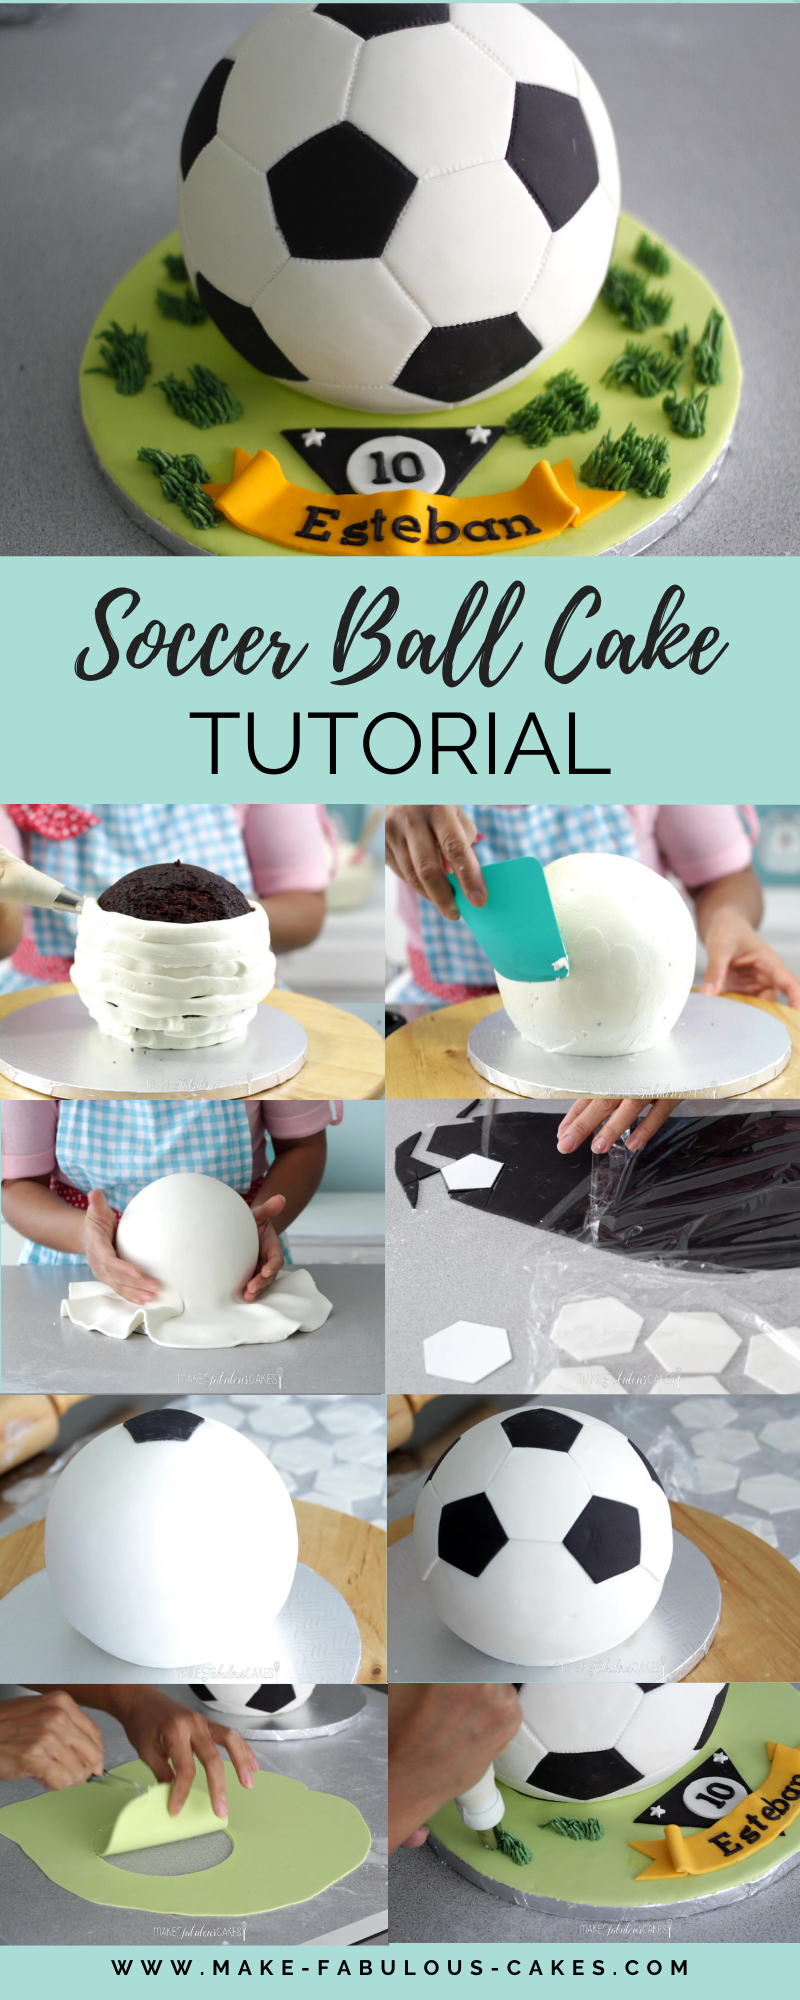 Soccer/ Football Cake Tutorial
by Make Fabulous Cakes